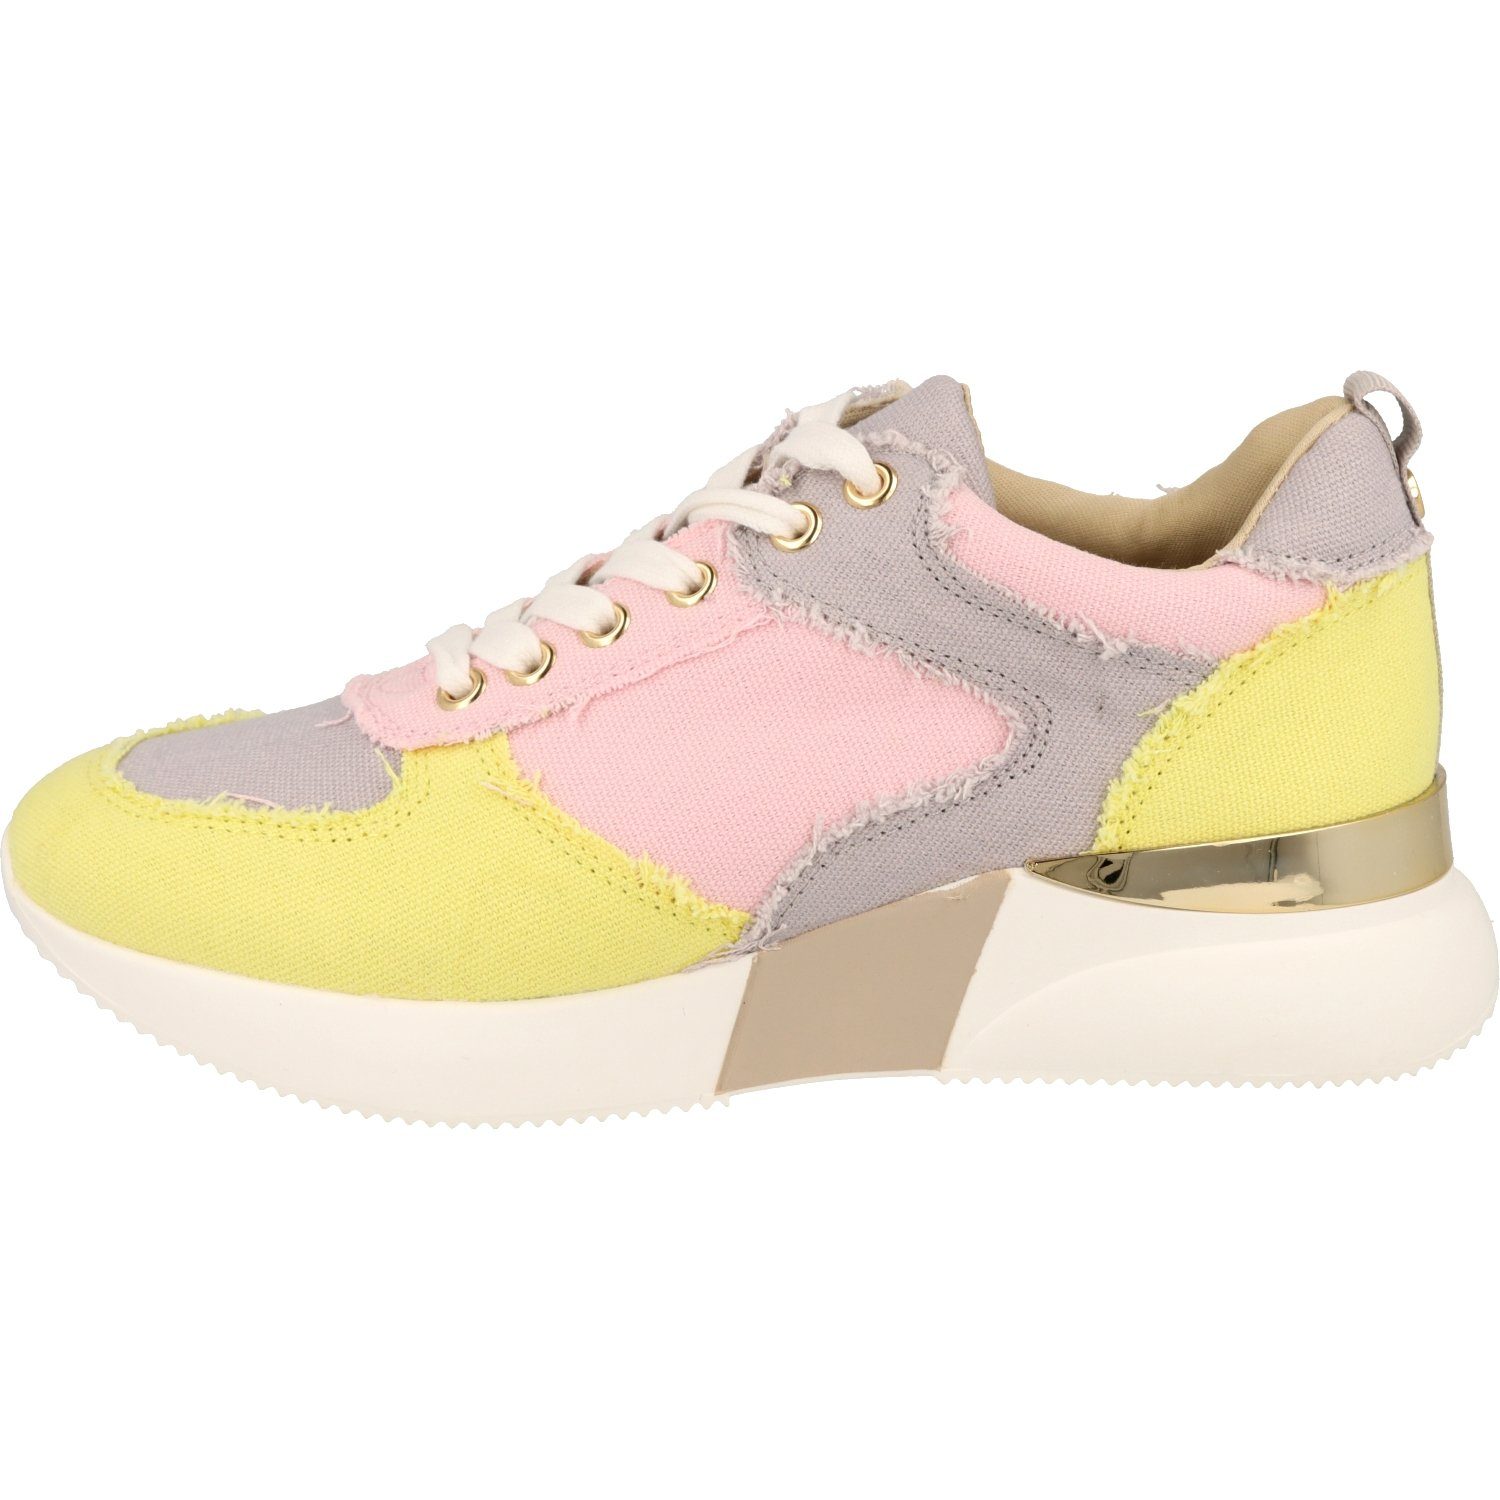 Strada La Sneaker Yellow/Grey Sneaker 2001068-4226 Schuhe Canvas Halbschuhe Damen Schnürer